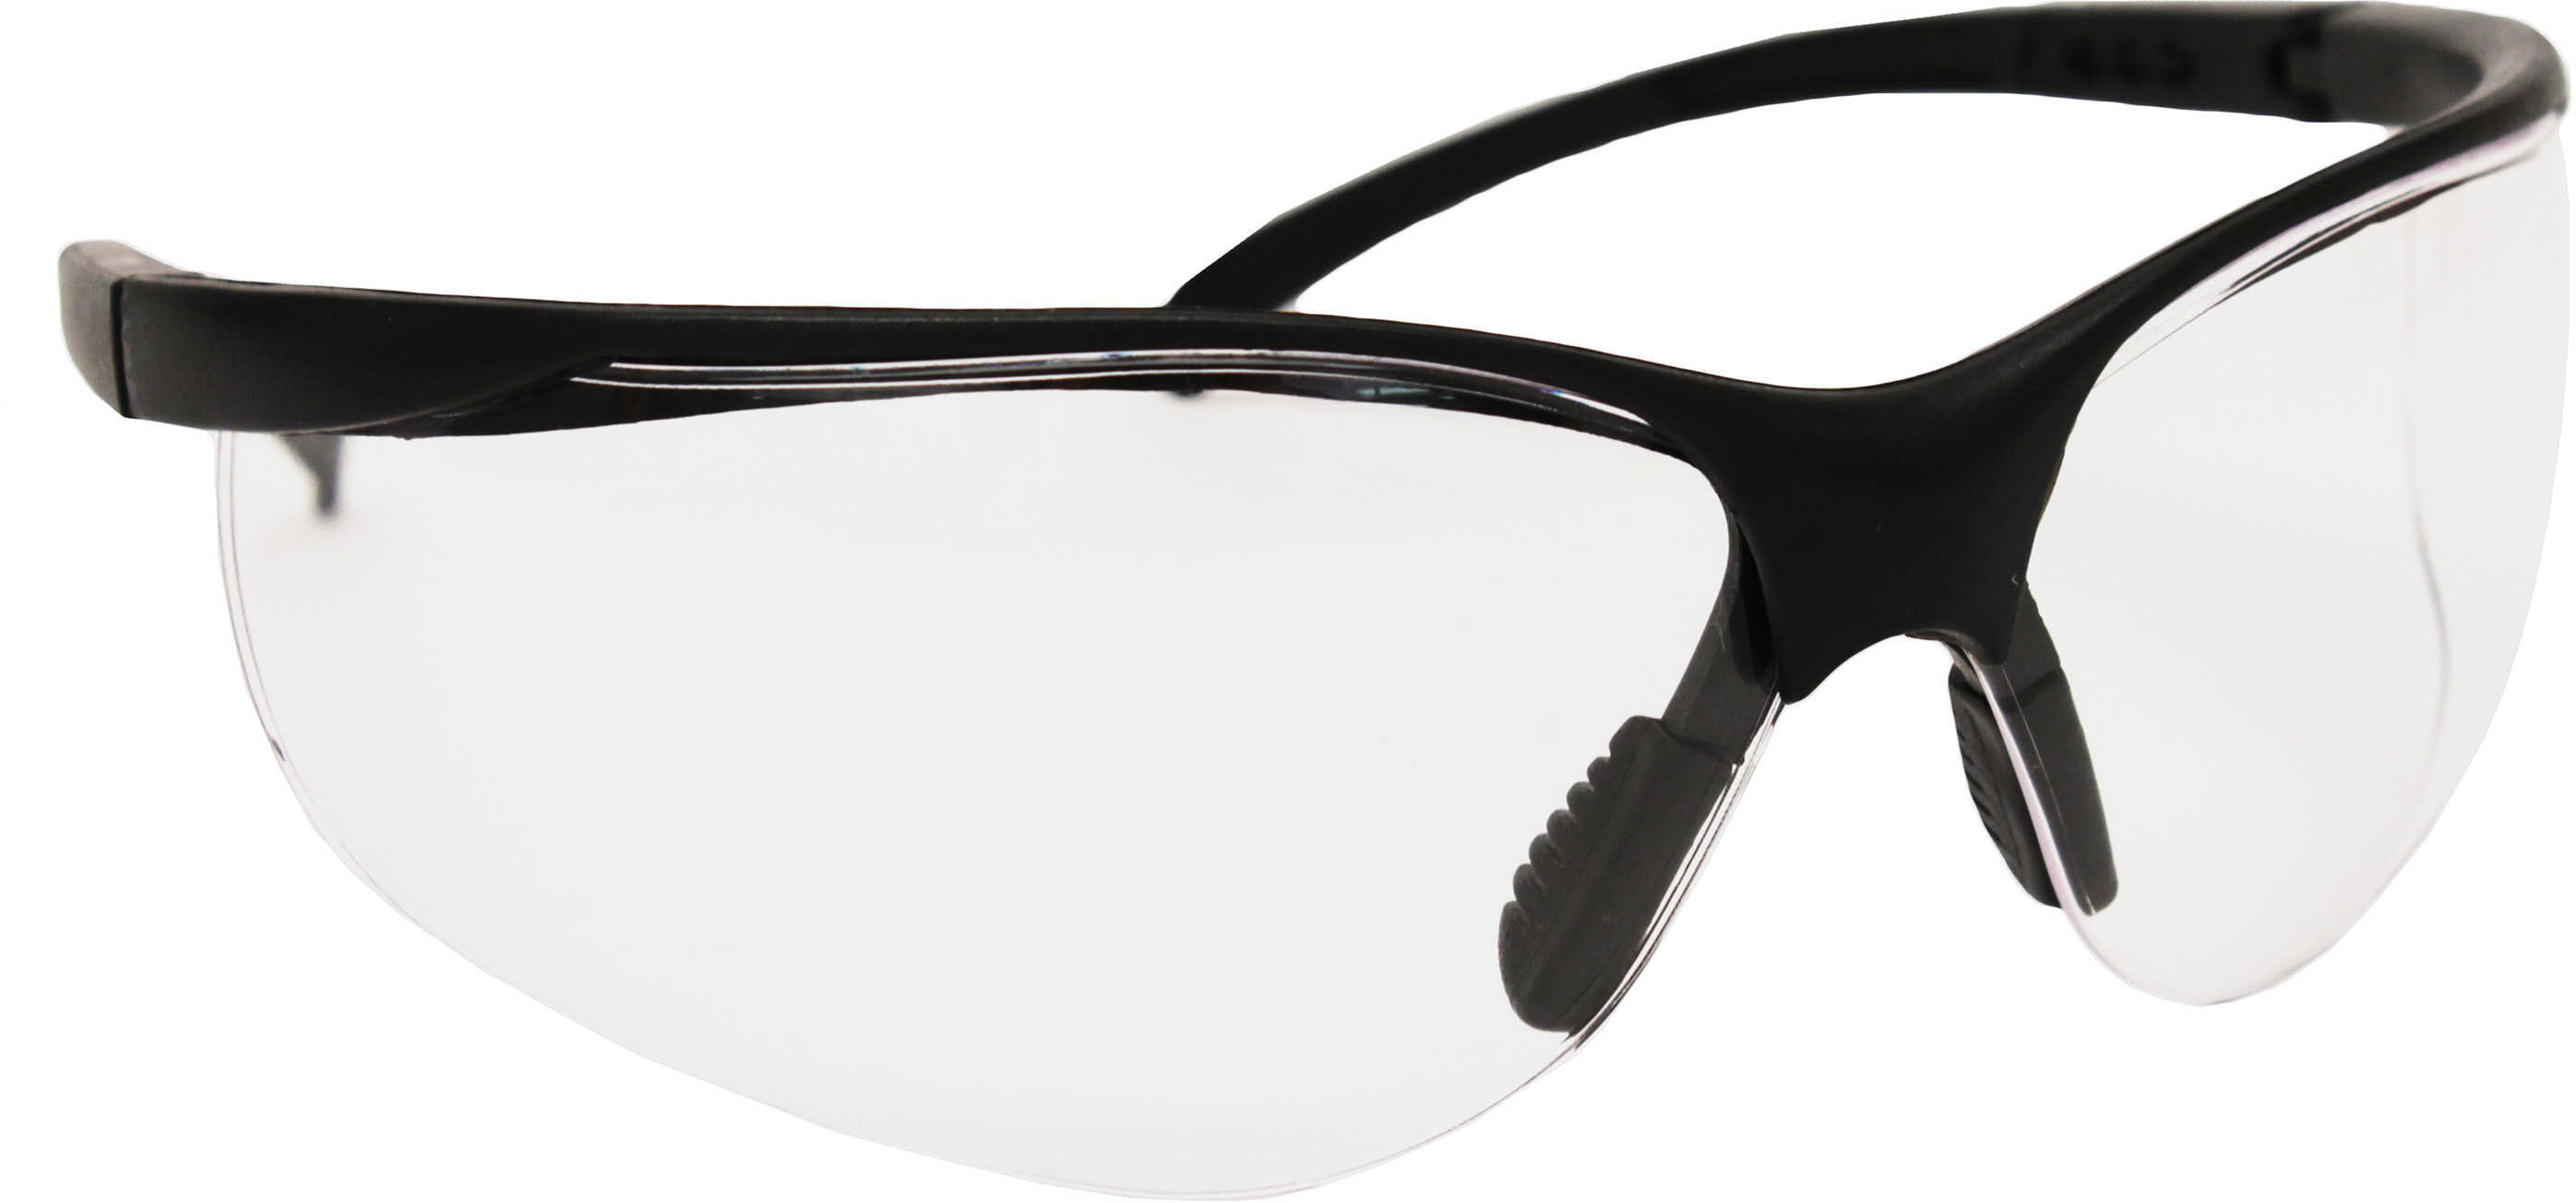 Caldwell 320040 Pro Range Shooting Glasses Clear Lens Black Frame 99.9% Uv Rating